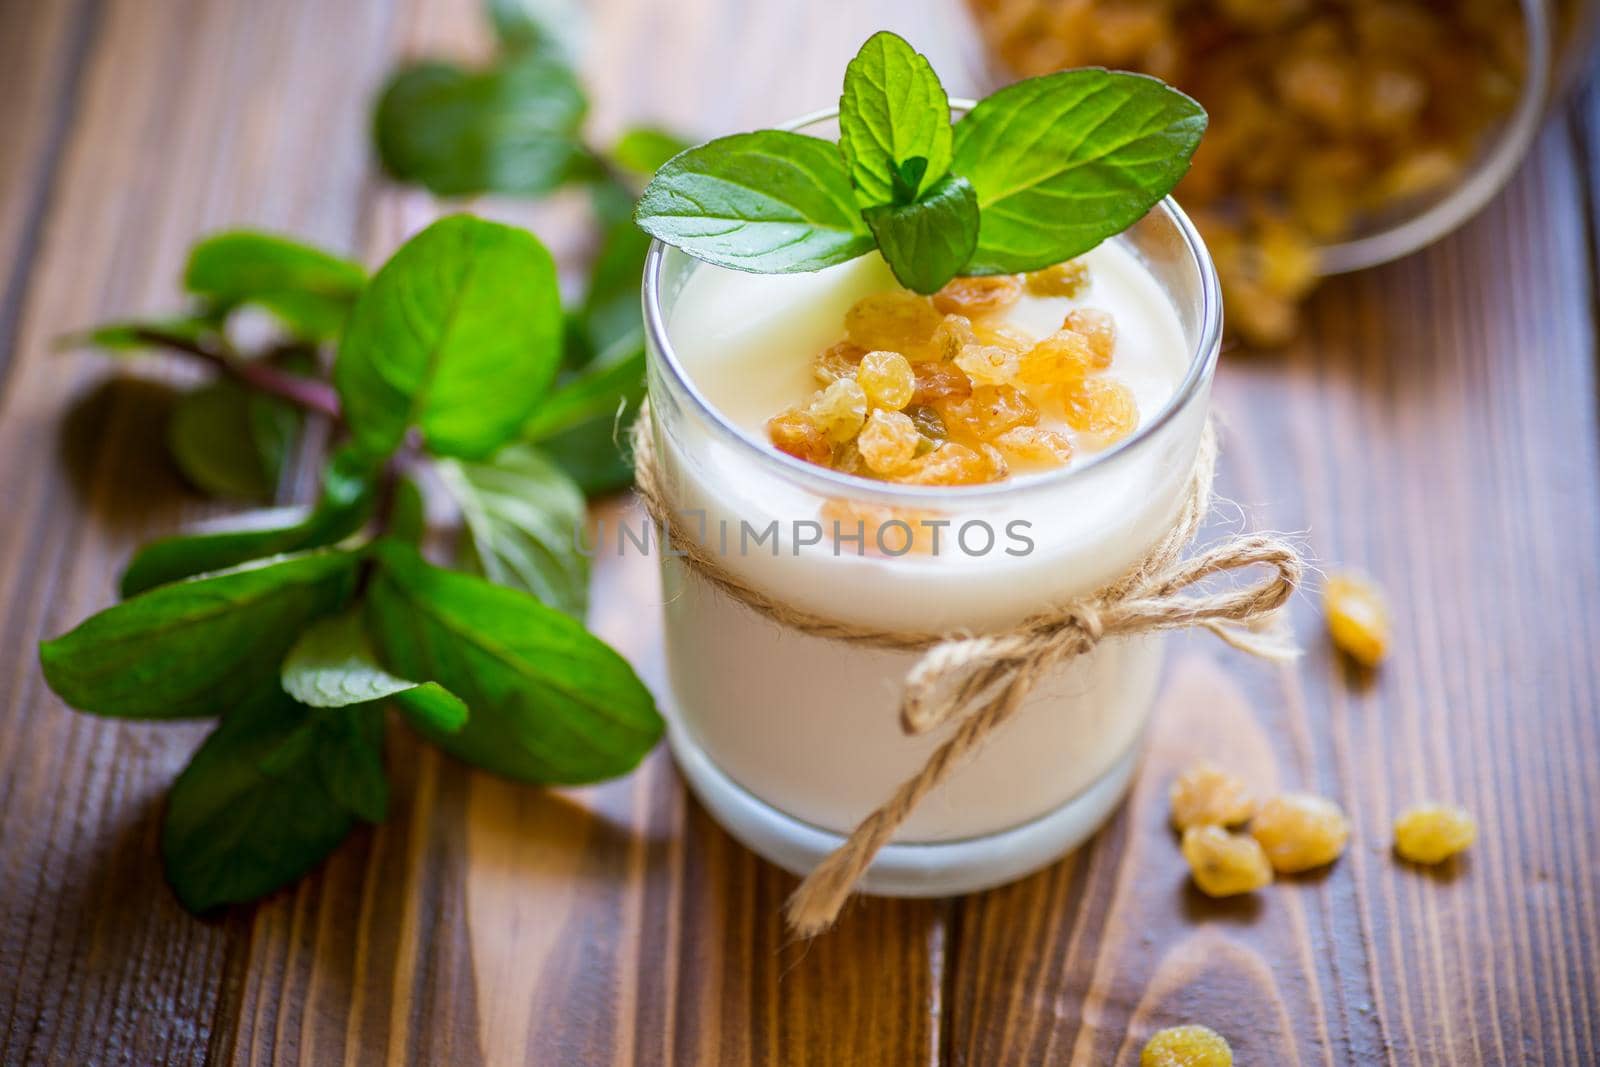 sweet homemade yogurt with raisins in a glass by Rawlik